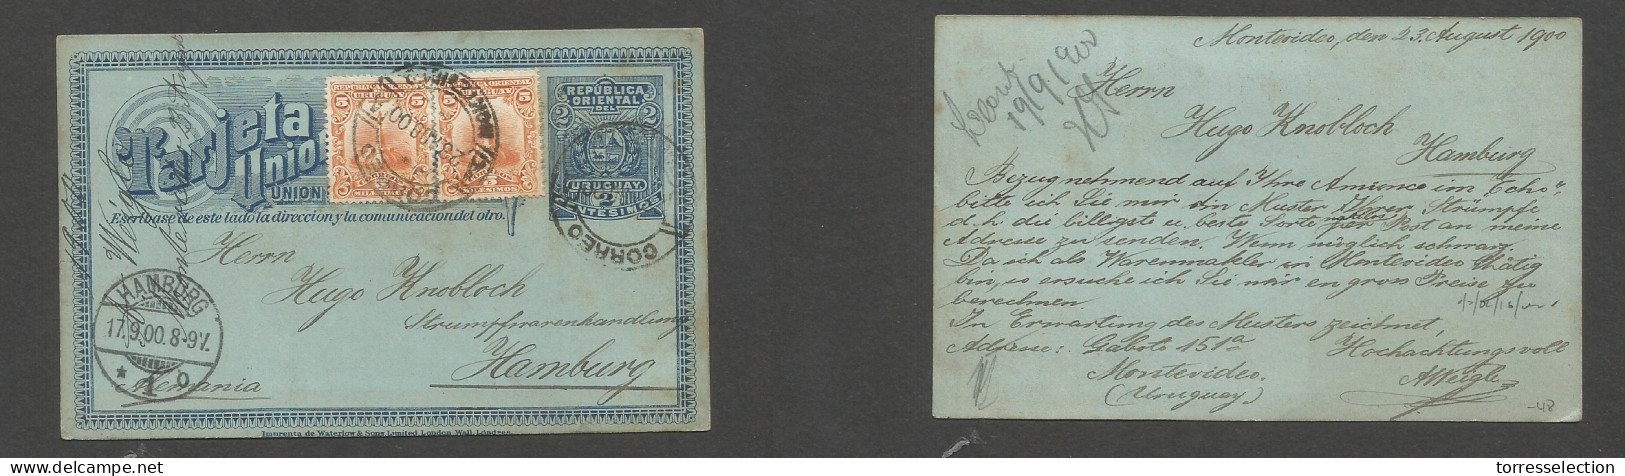 URUGUAY. 1900 (23 Aug) Mont - Germany, Hamburg (17 Sept) 2c Blue Stat Card + Adtl, Tied Cds. VF. XSALE. - Uruguay